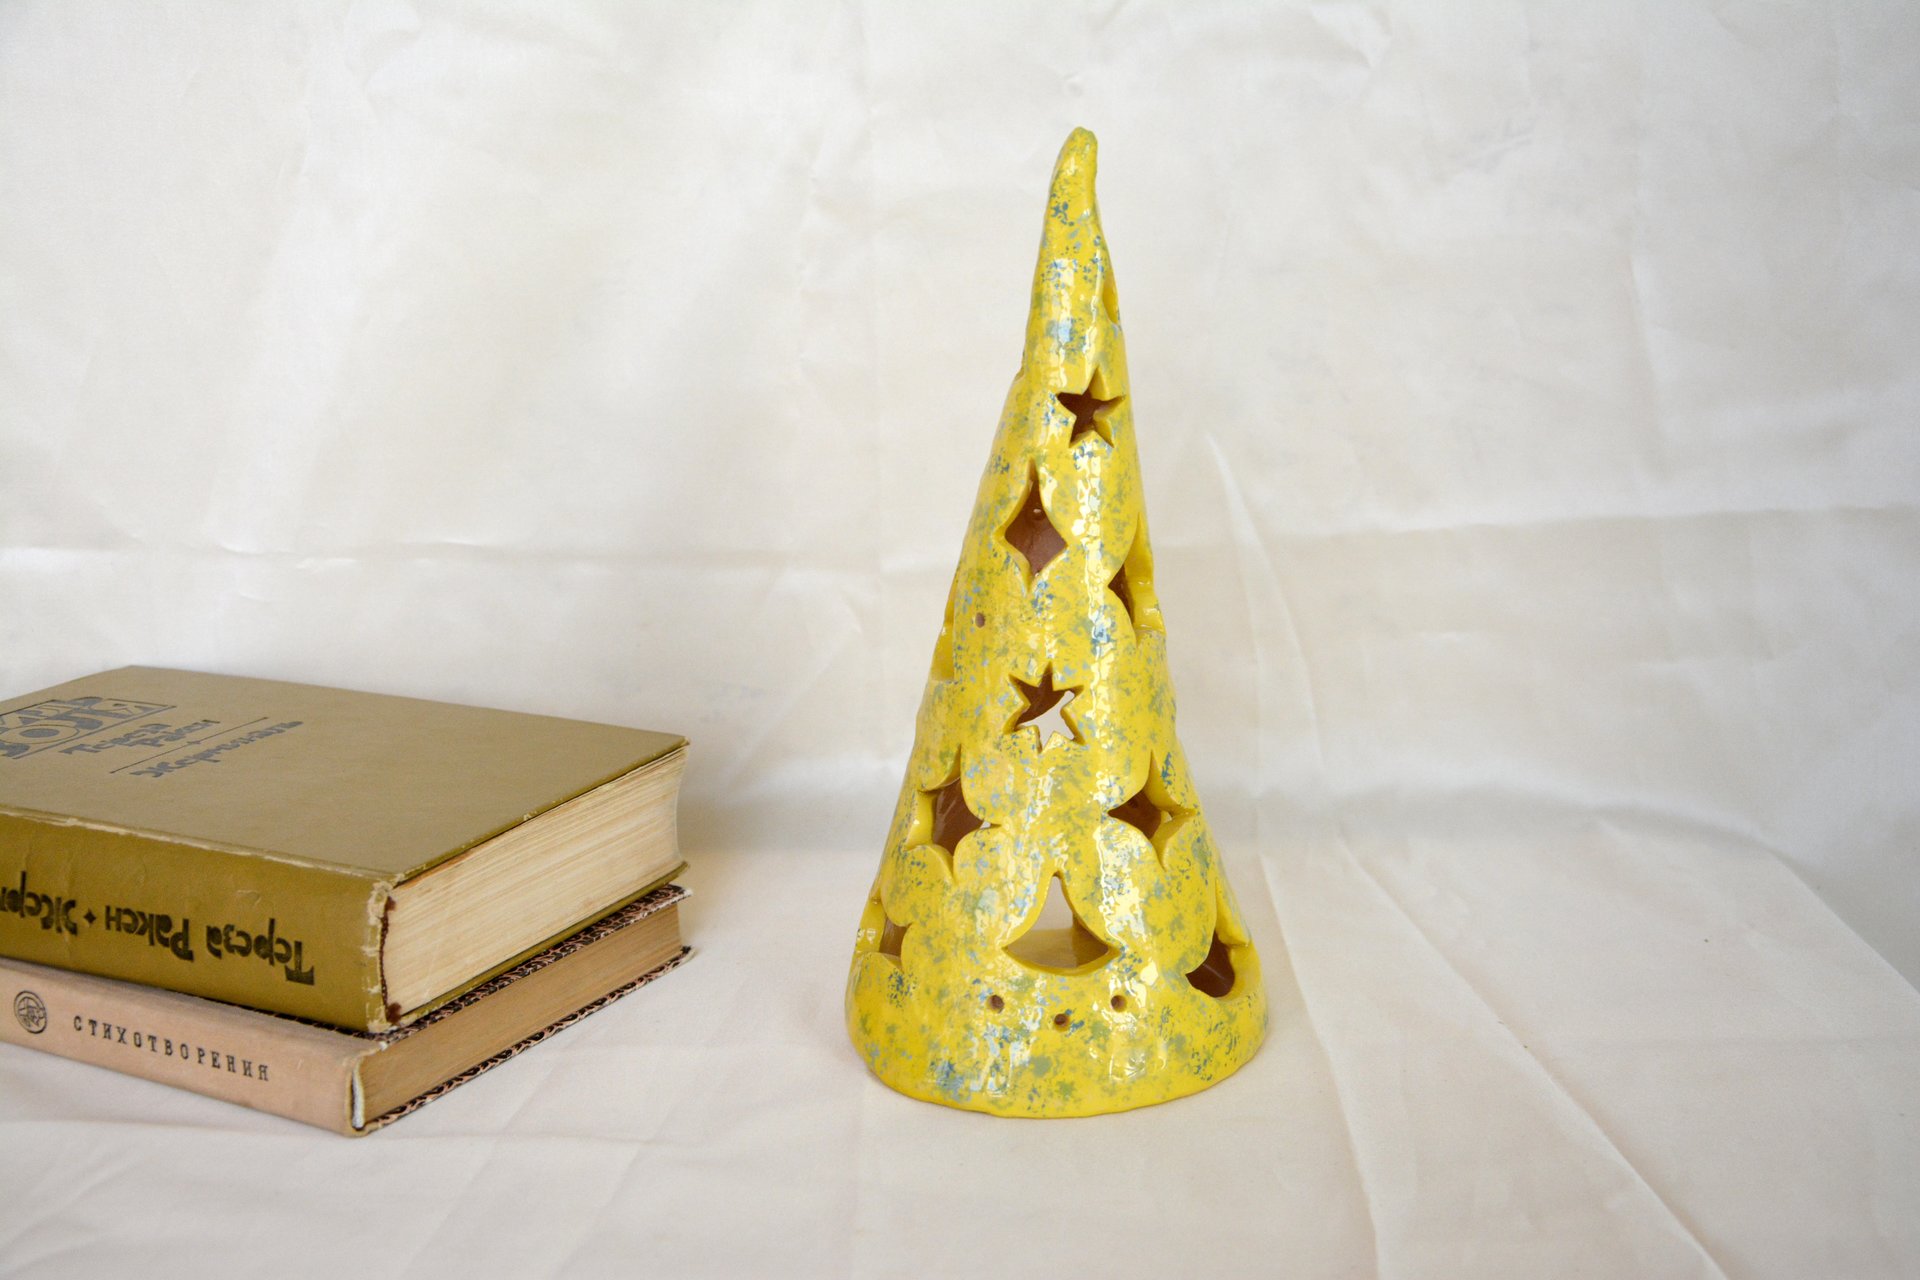 Night light Yellow cone - Ceramic Candl-holders, height - 25 cm, photo 1 of 3.